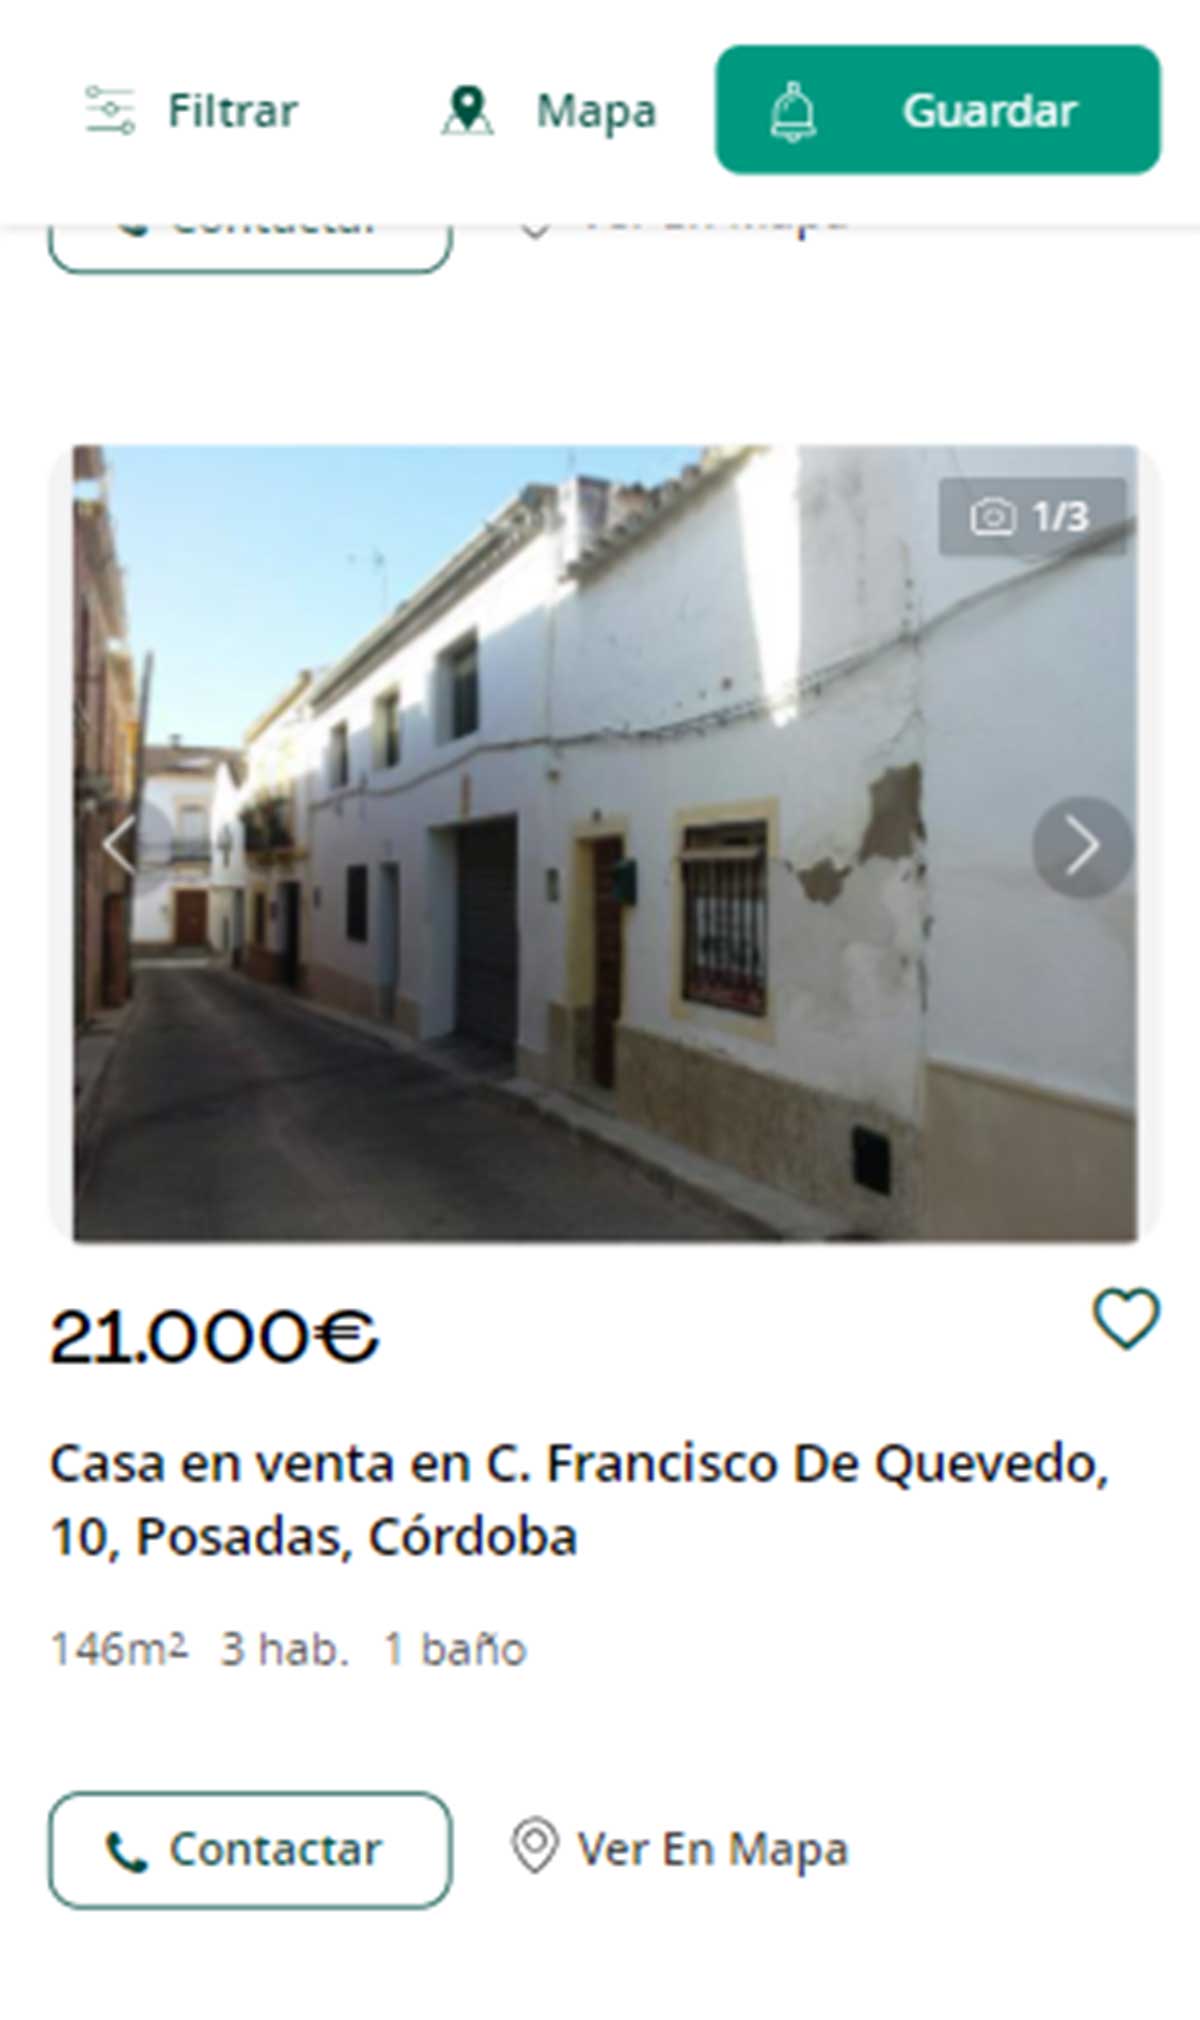 Piso a la venta en Córdoba por 21.000 euros